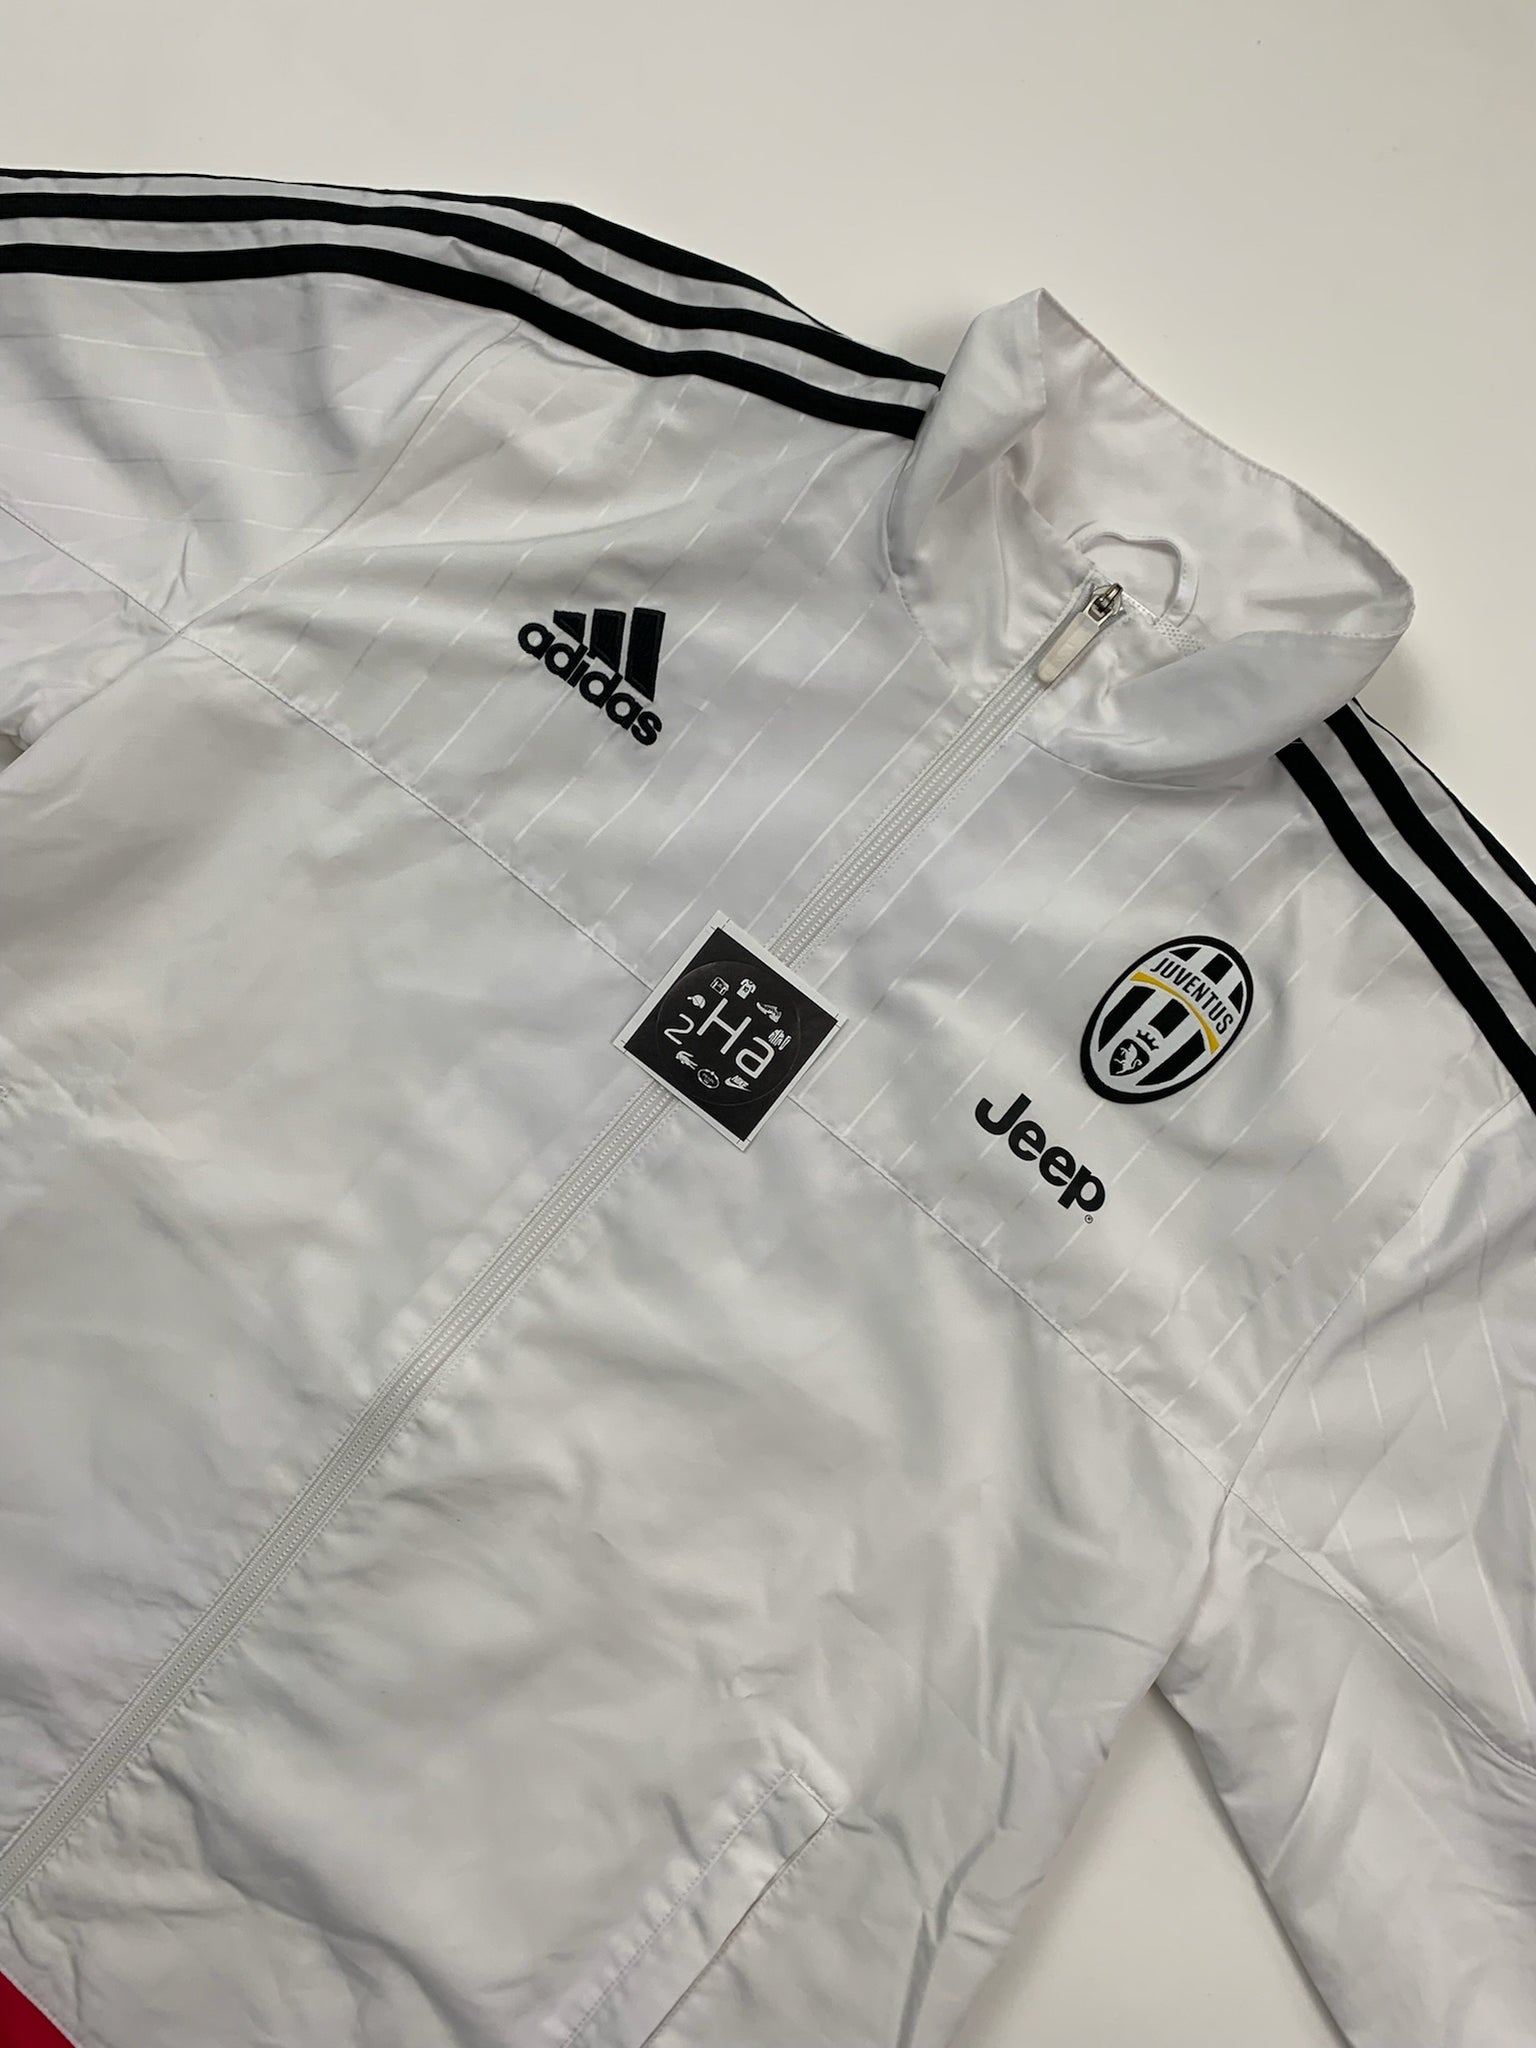 Adidas Juventus Tracksuit (M)